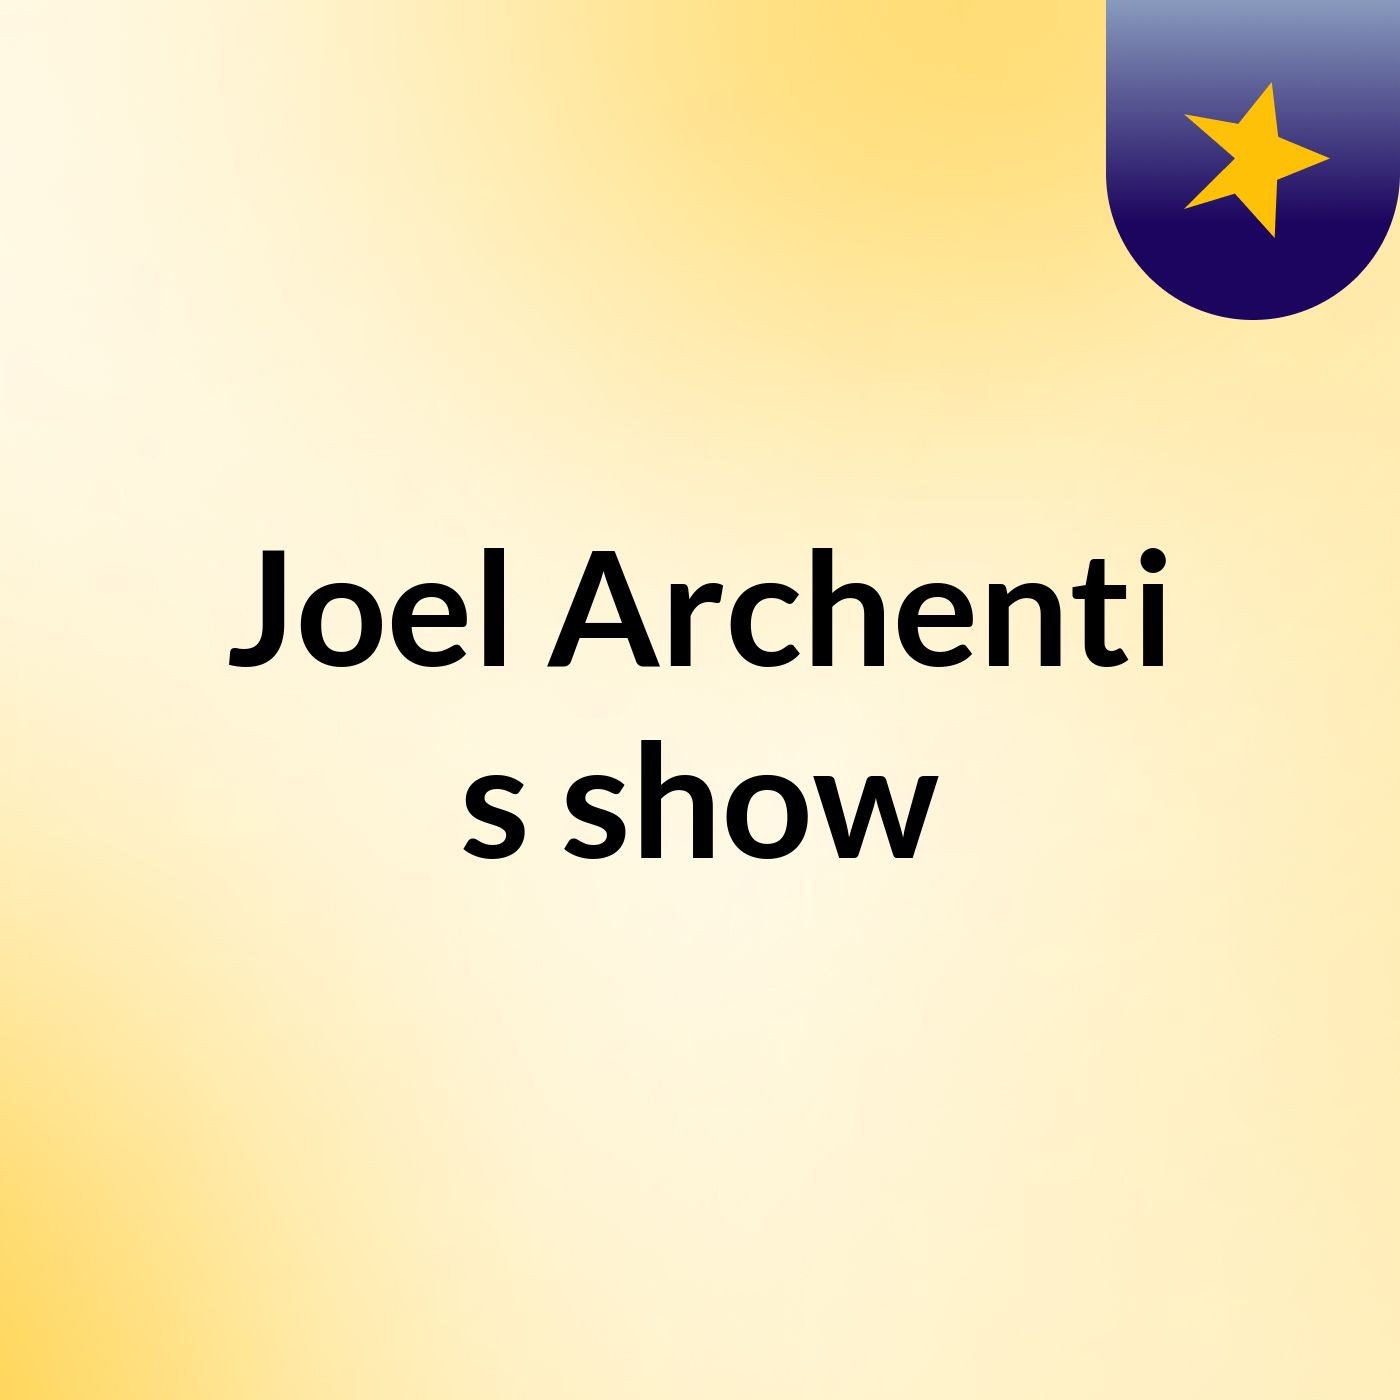 Joel Archenti's show